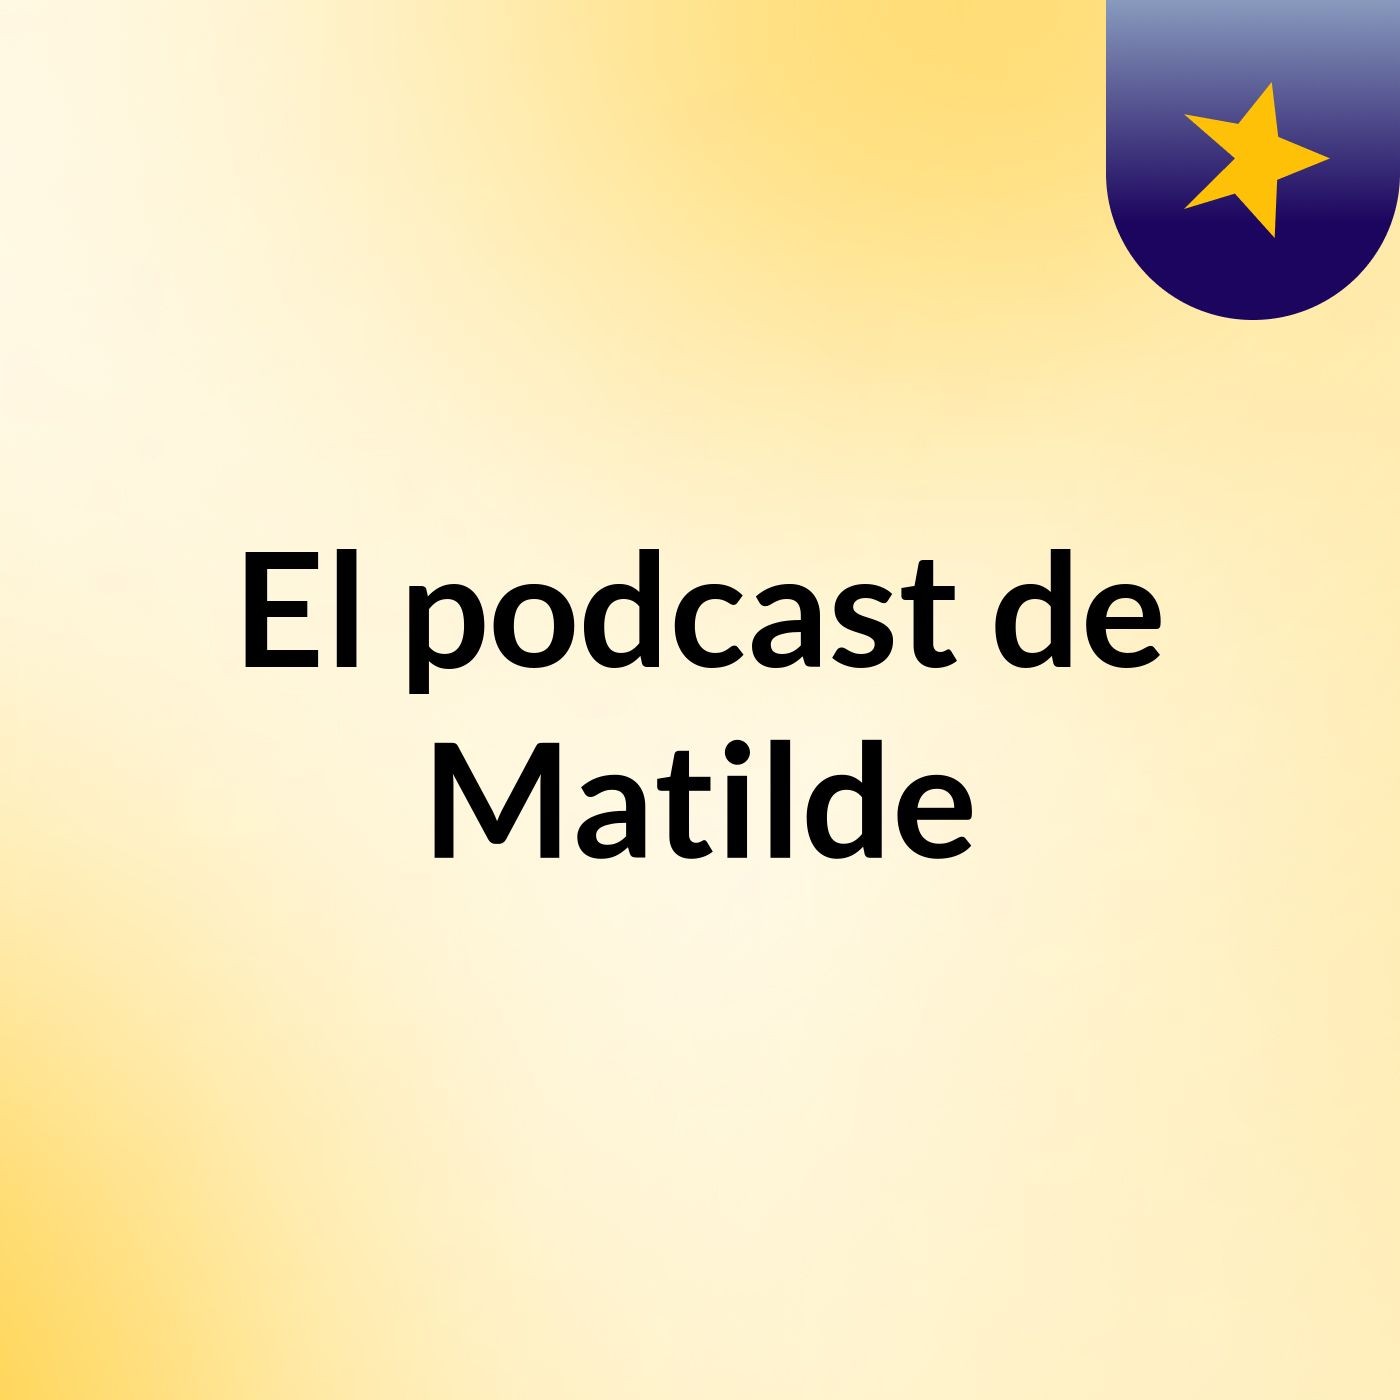 Episodio 3 - El podcast de Matilde